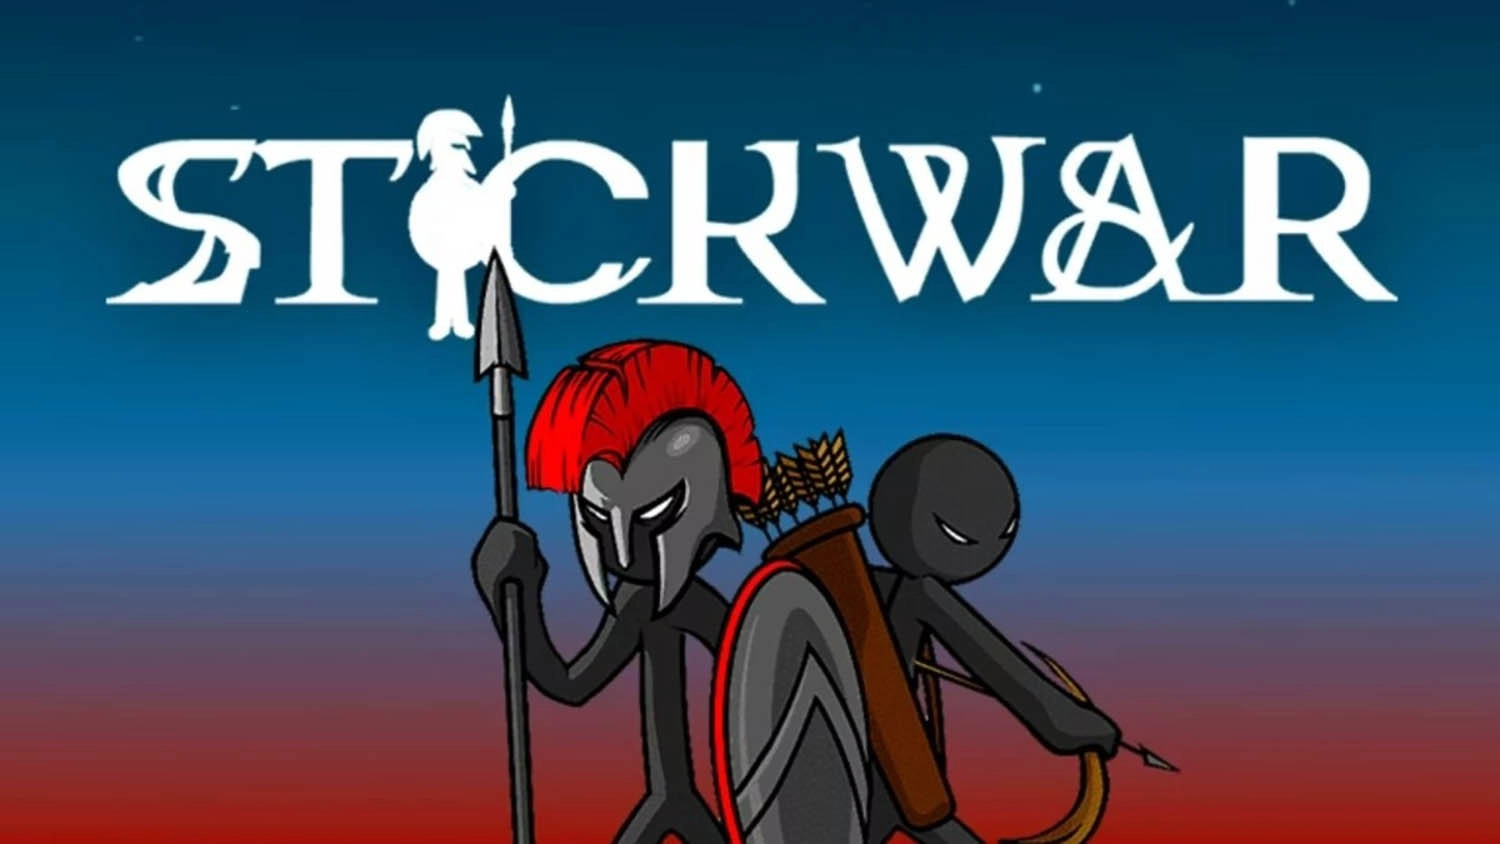 game chiến thuật: Stick War Legacy